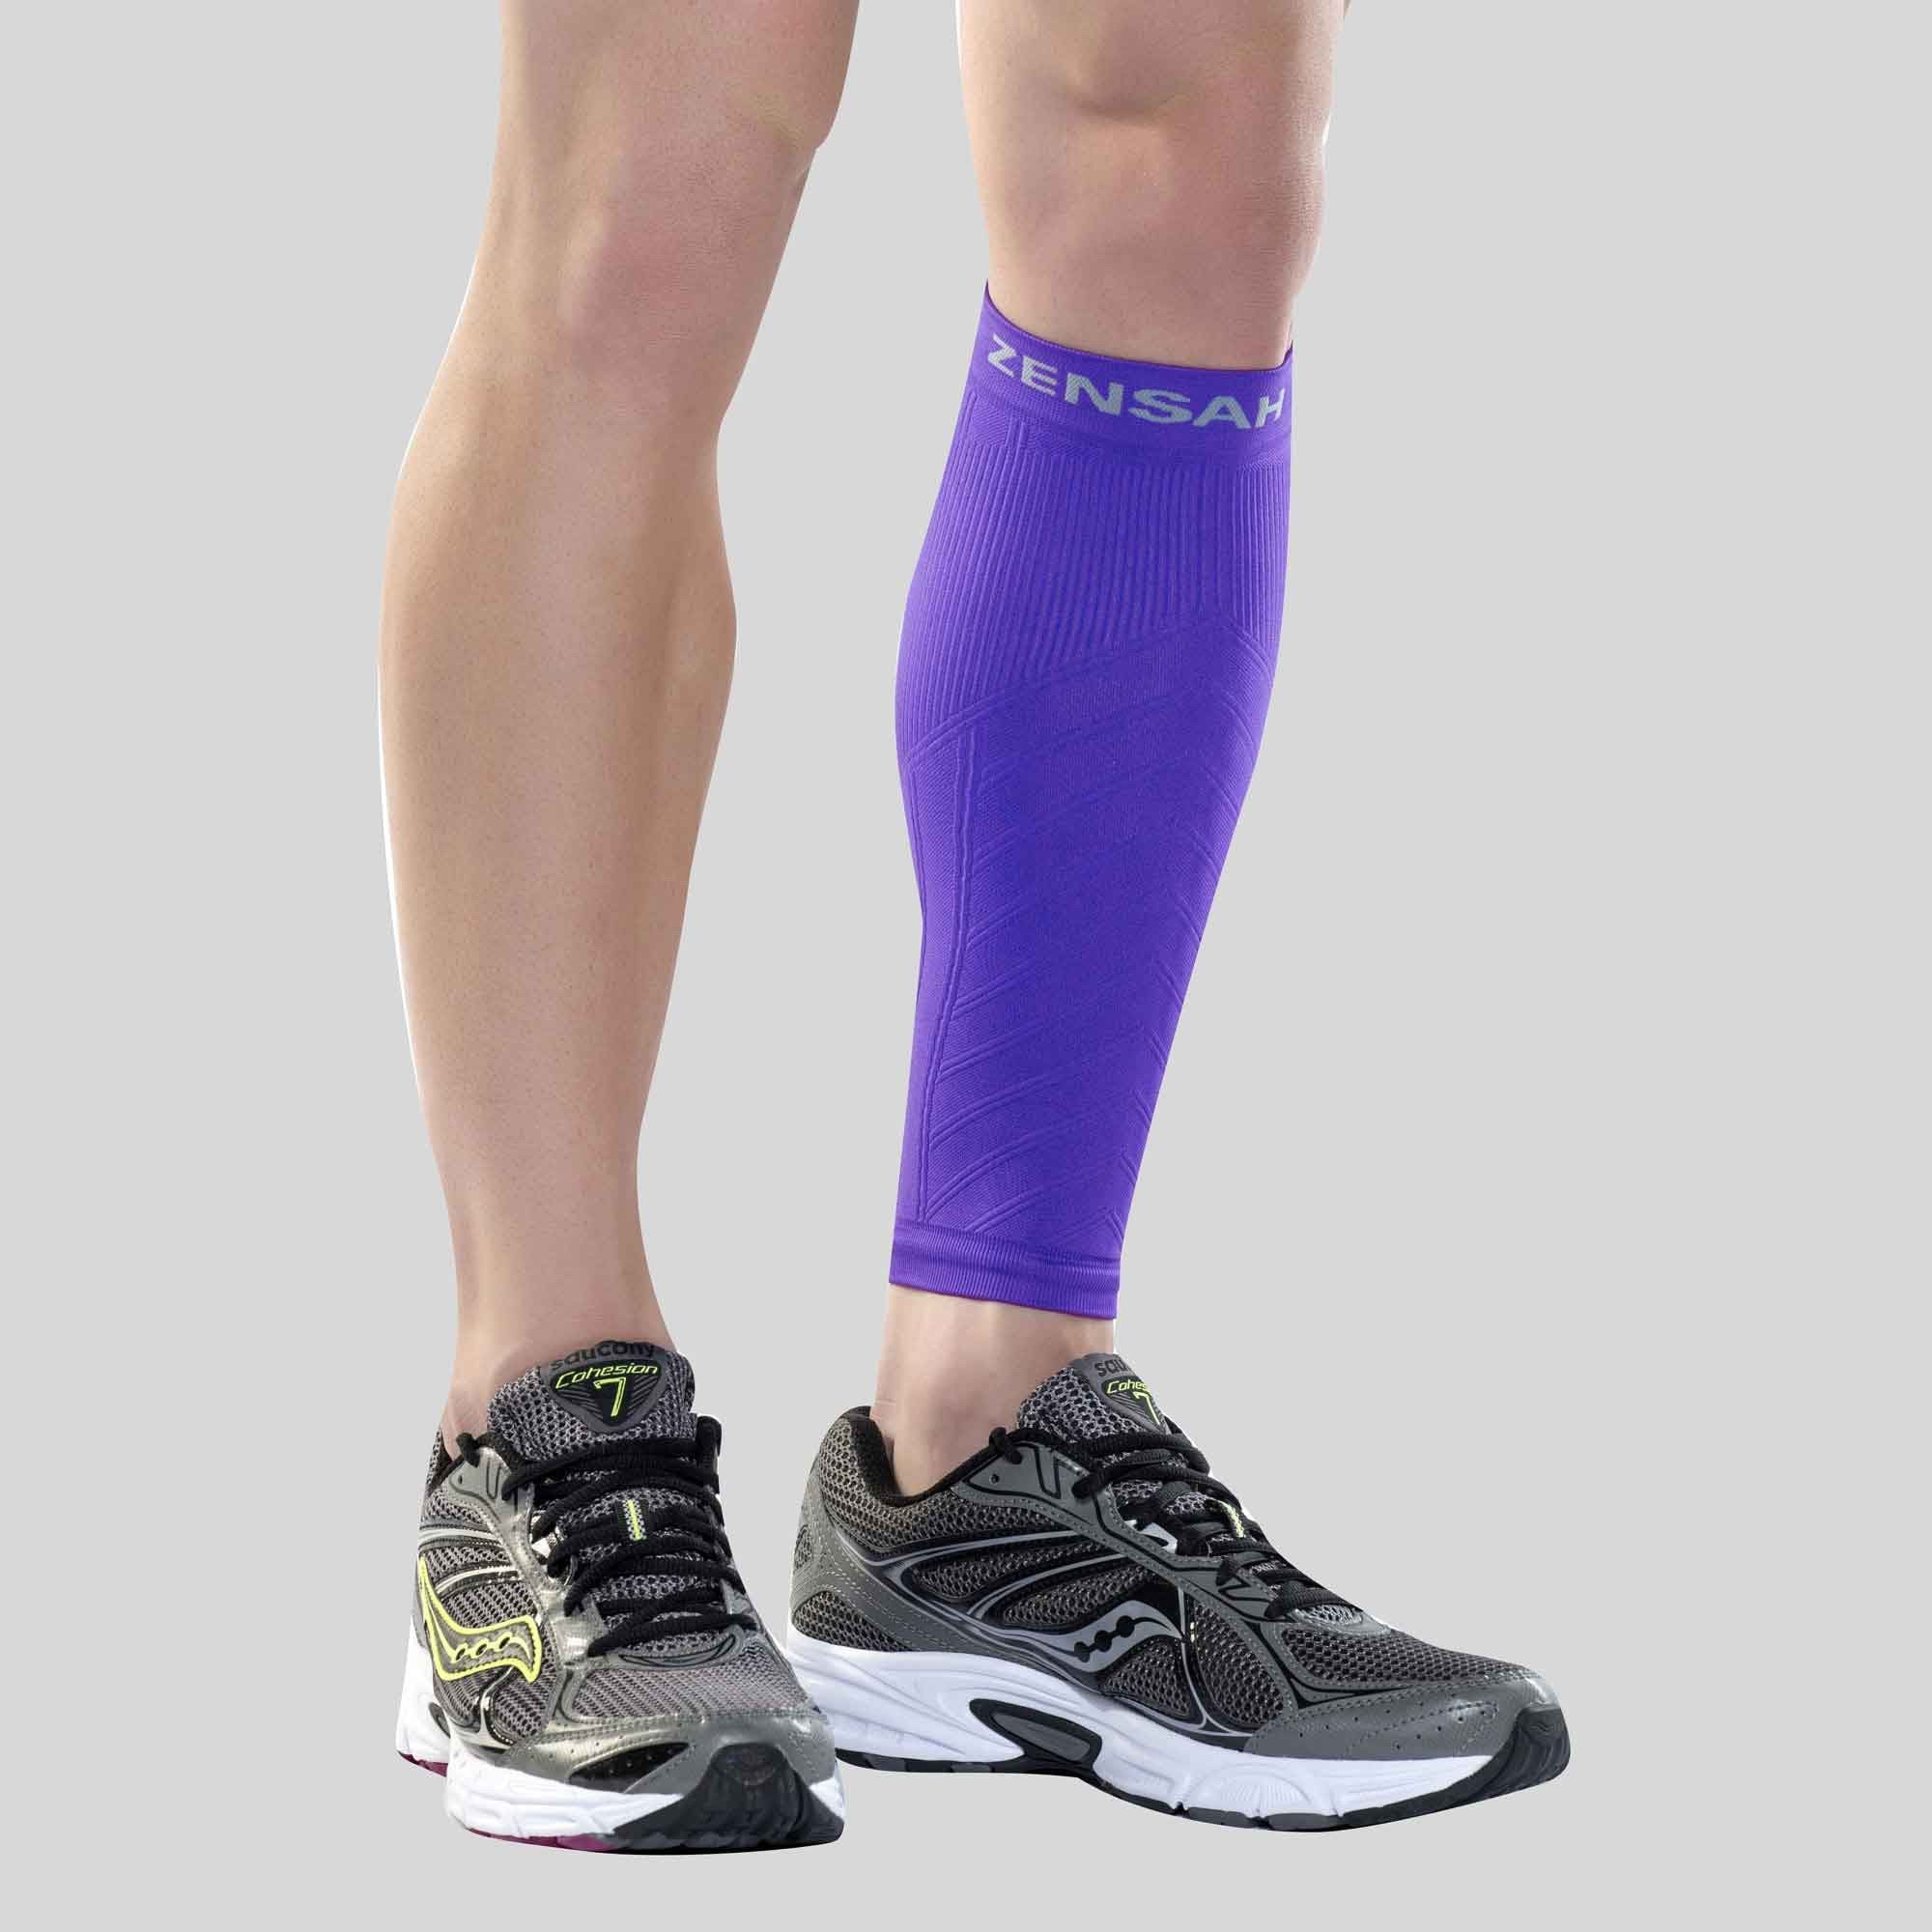 Seyurigaoka Calf Compression Sleeves, Adults Footless Compression Calf  Sleeves for Shin Splint, Soccer Football Leg Sleeves for Women, Men 